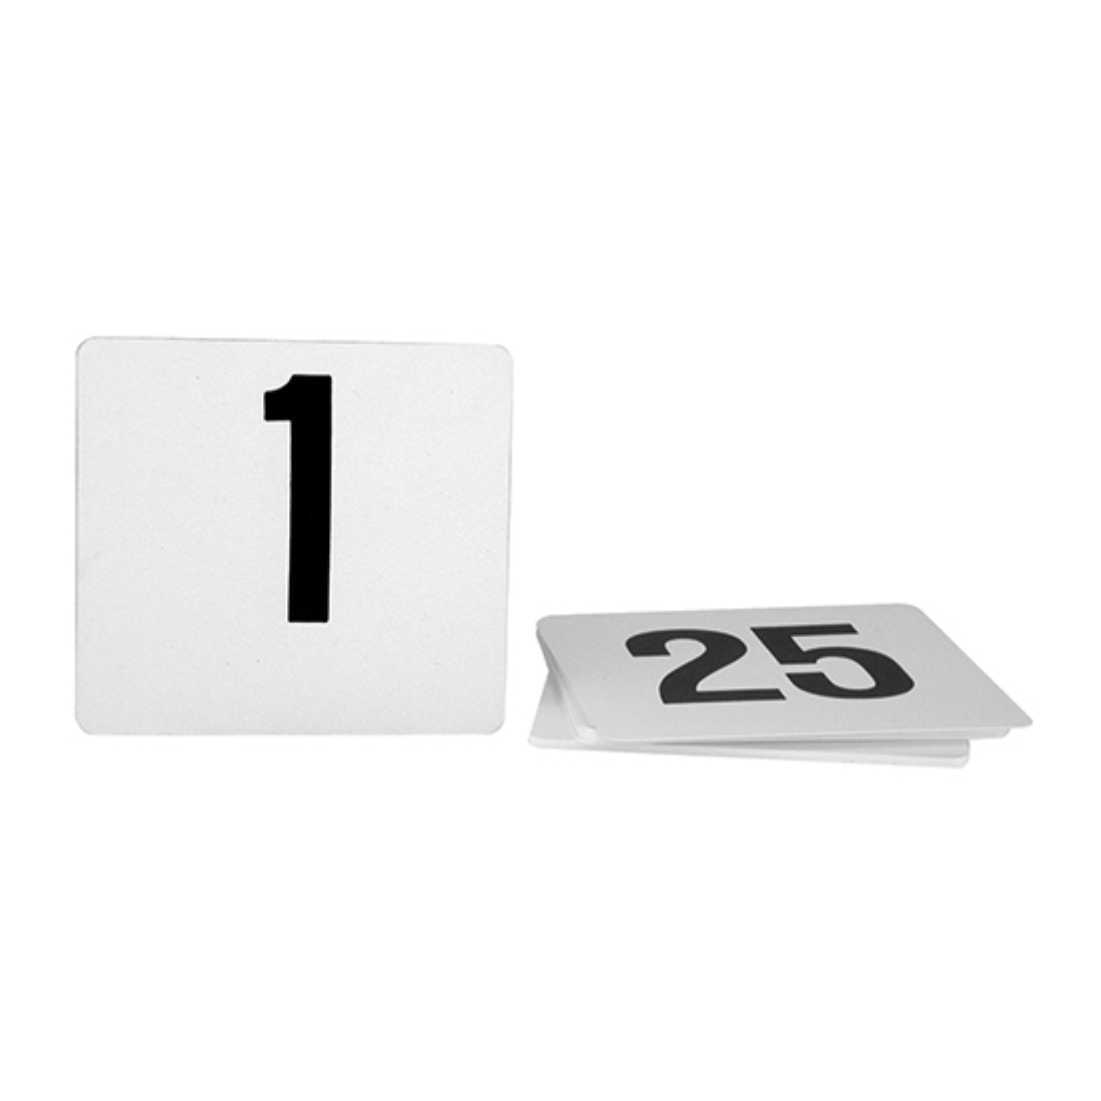 Plastic table numbers | white plastic table numbers | restaurant table ...